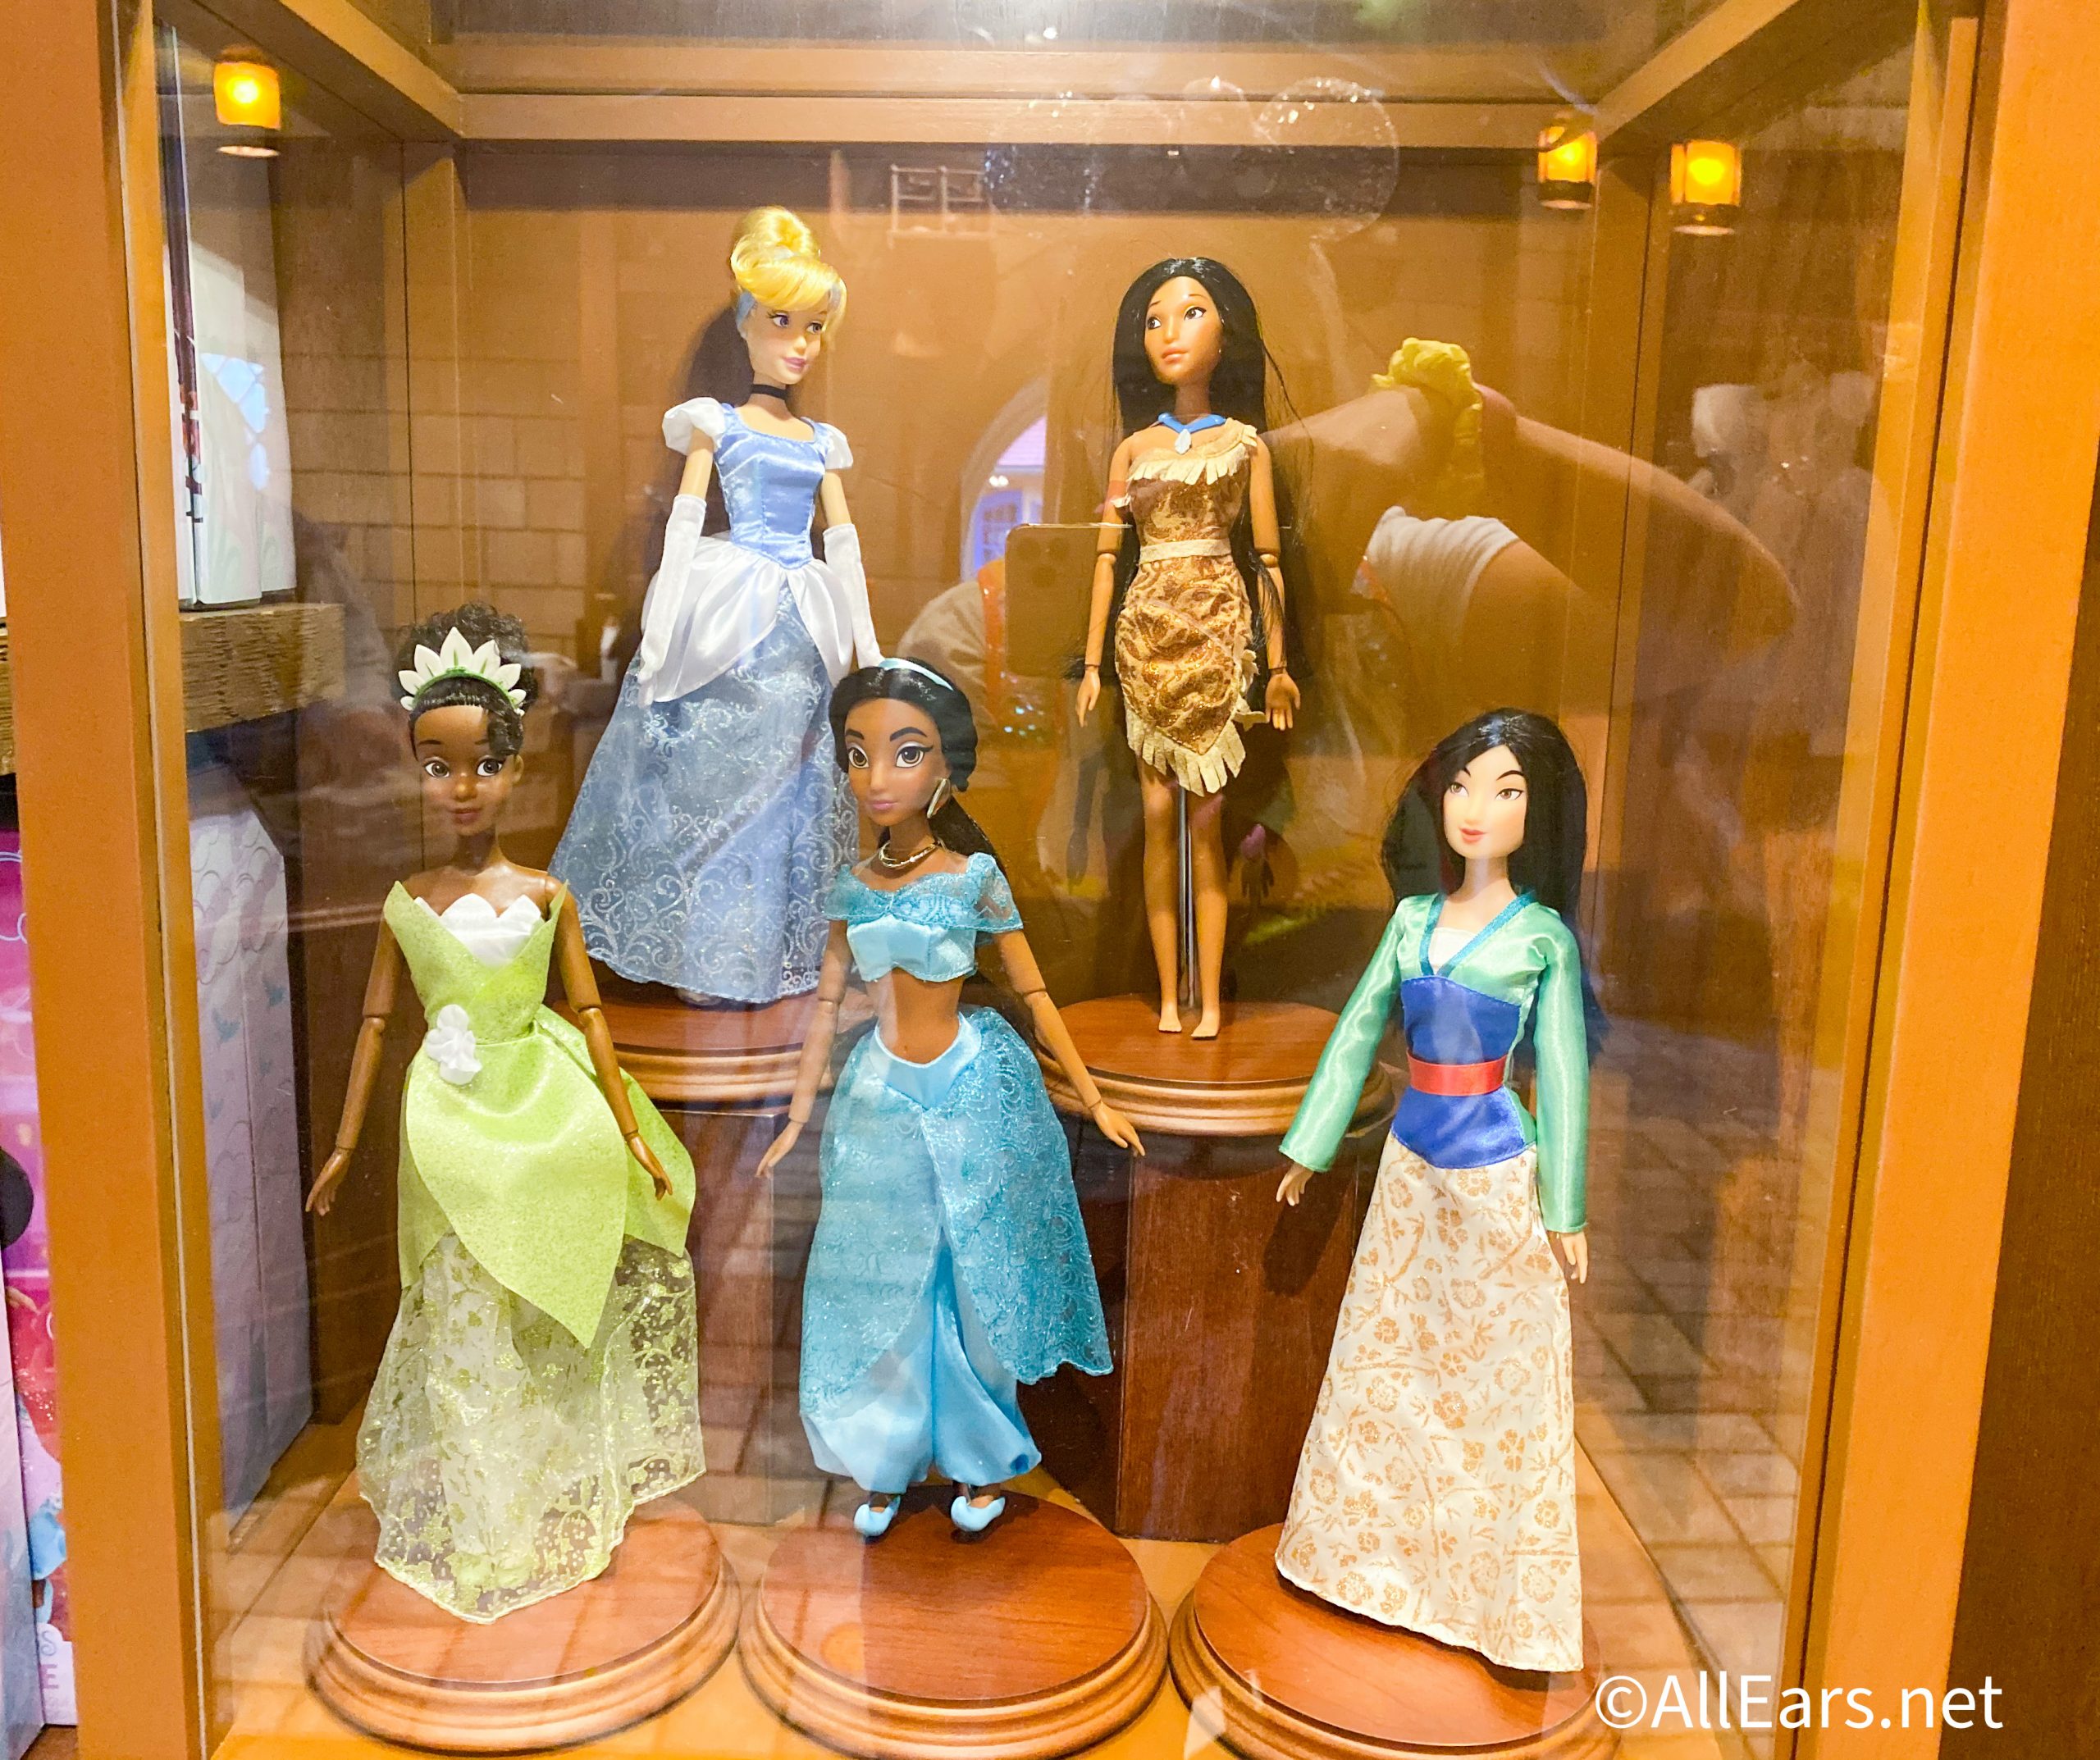 Mattel grabs rights to Disney Princess, 'Frozen' from Hasbro